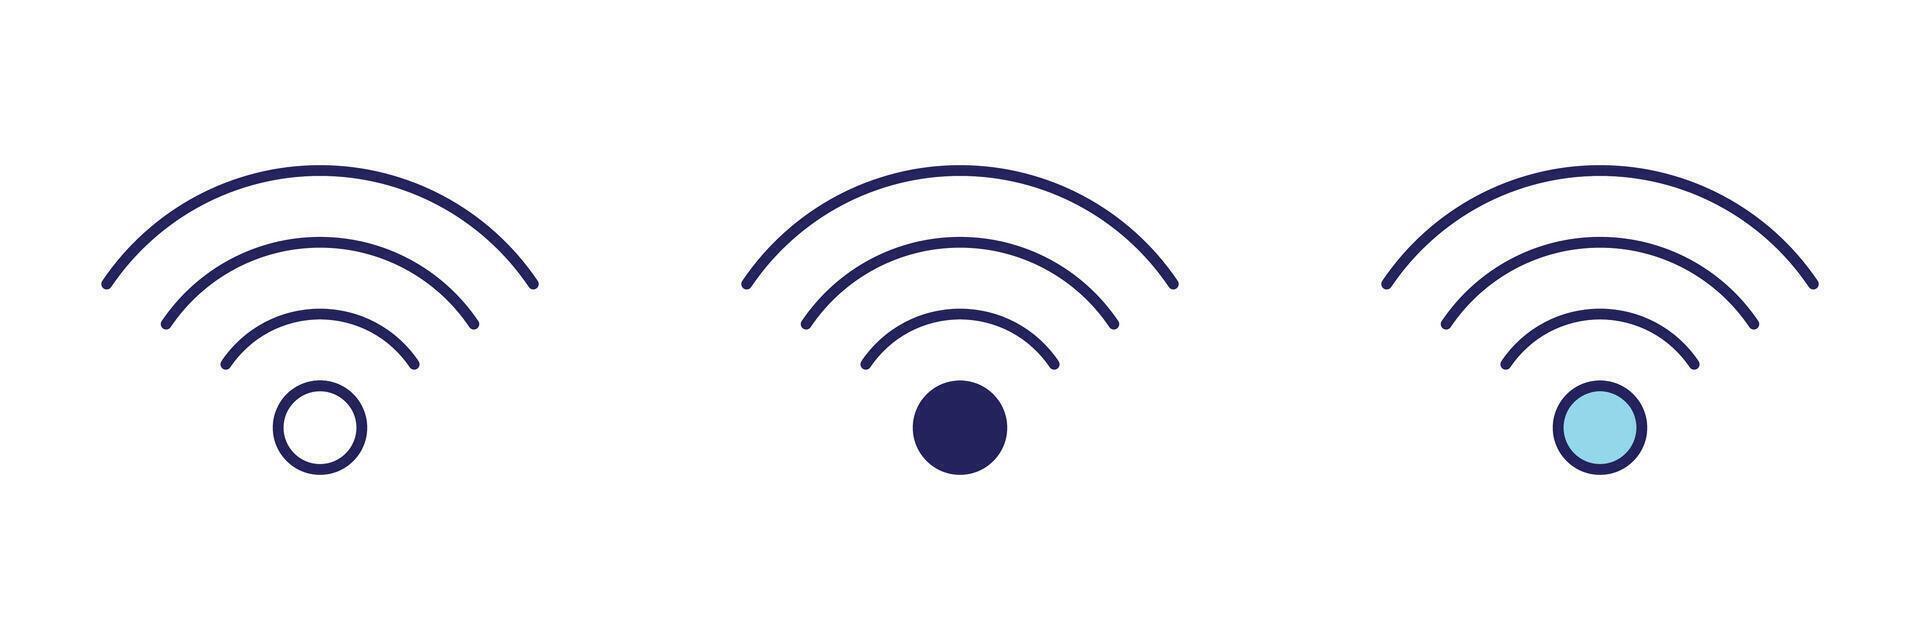 Wifi Icon - Navigation Set vector